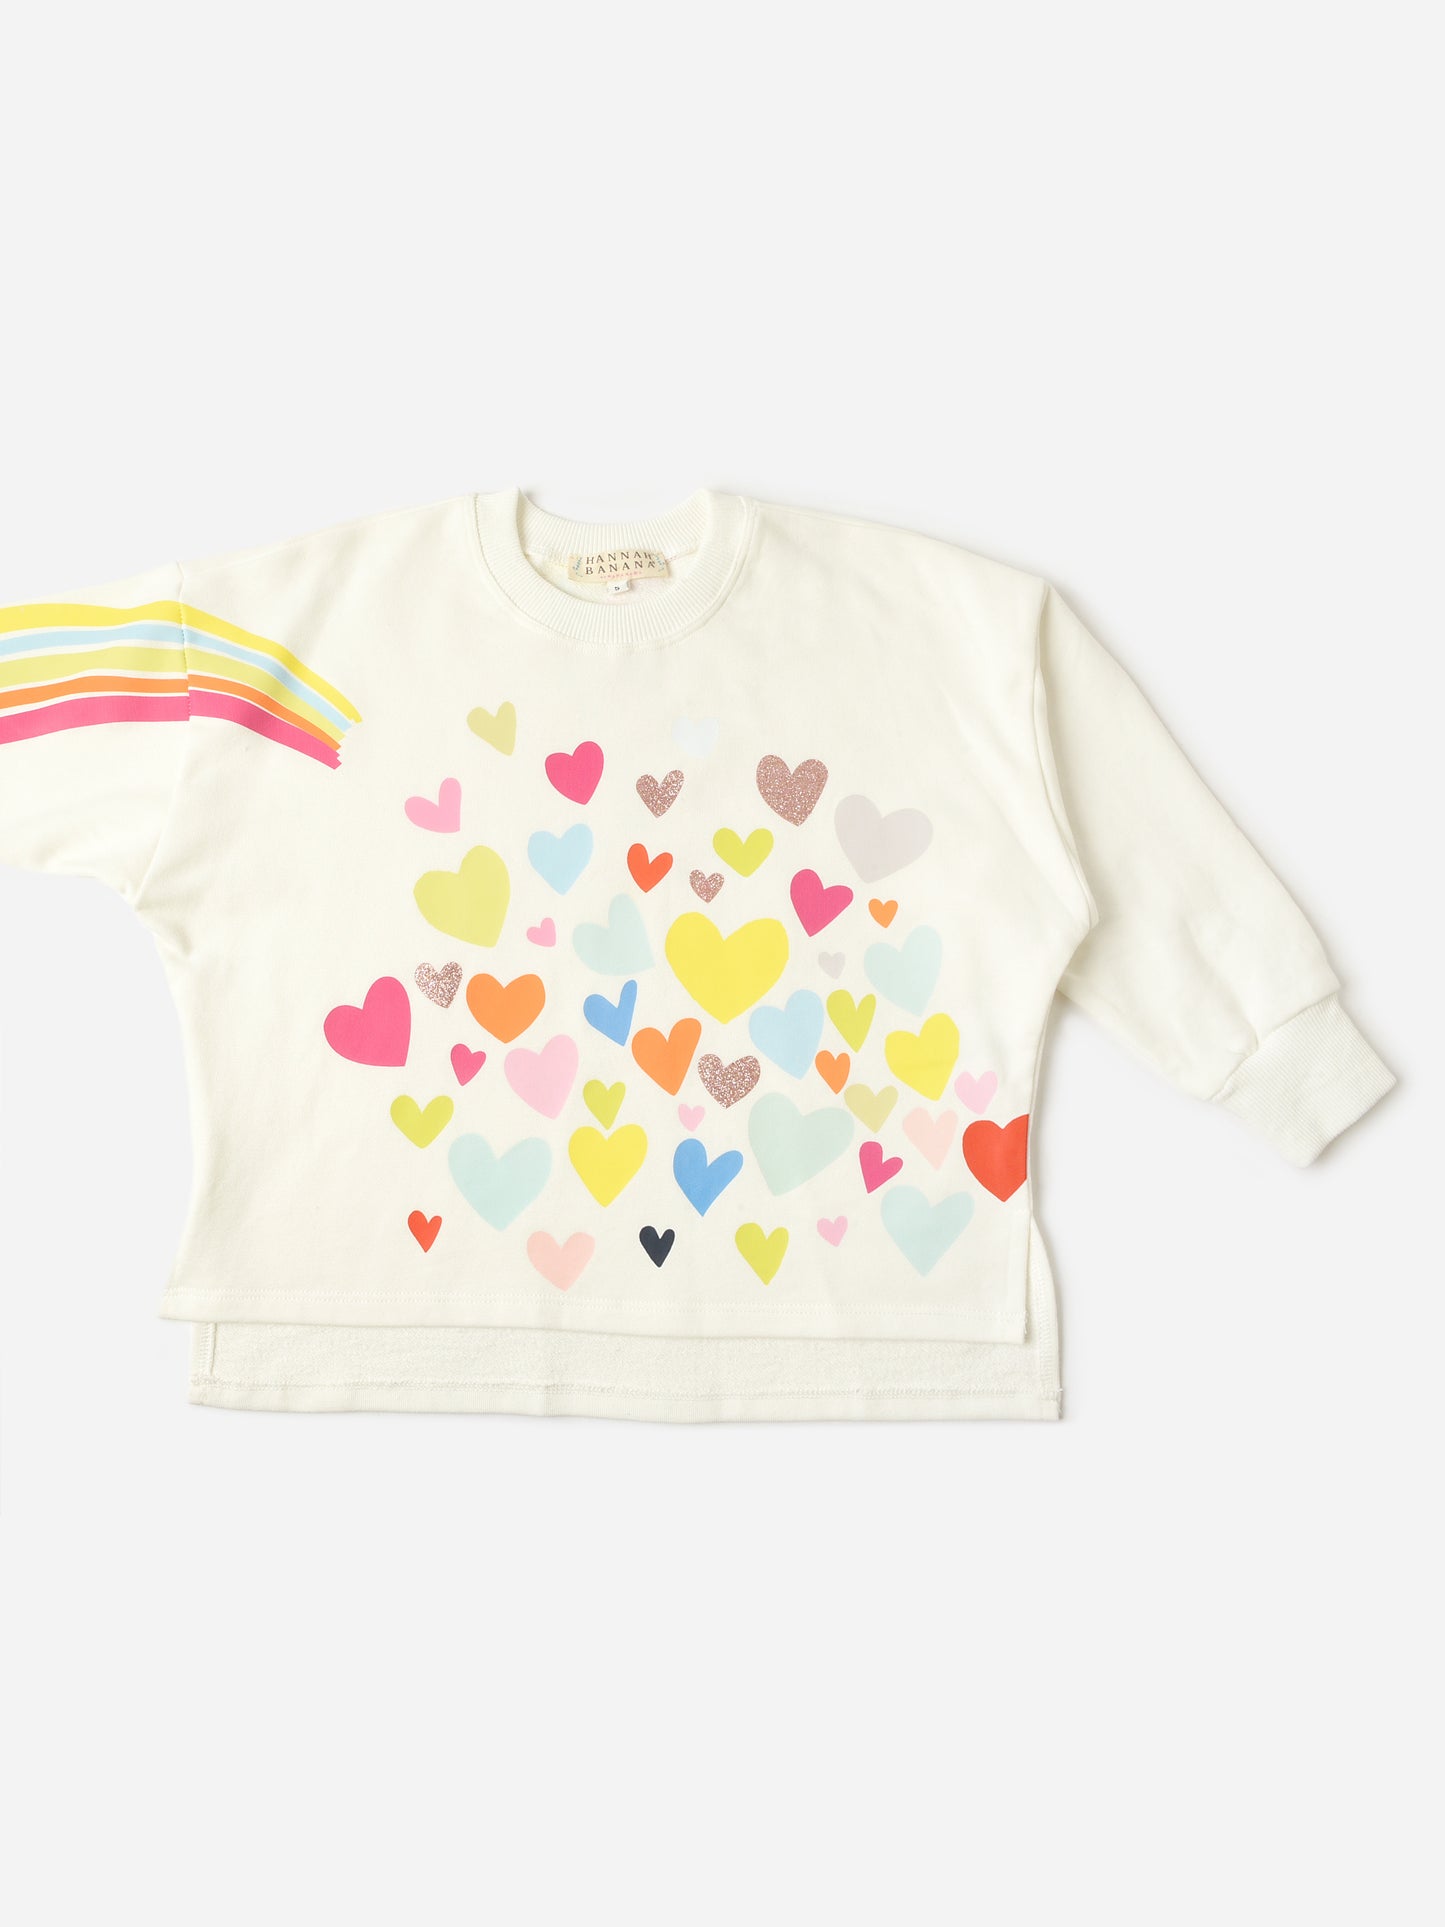 Hannah Banana Girls' Rainbow + Heart Print Top